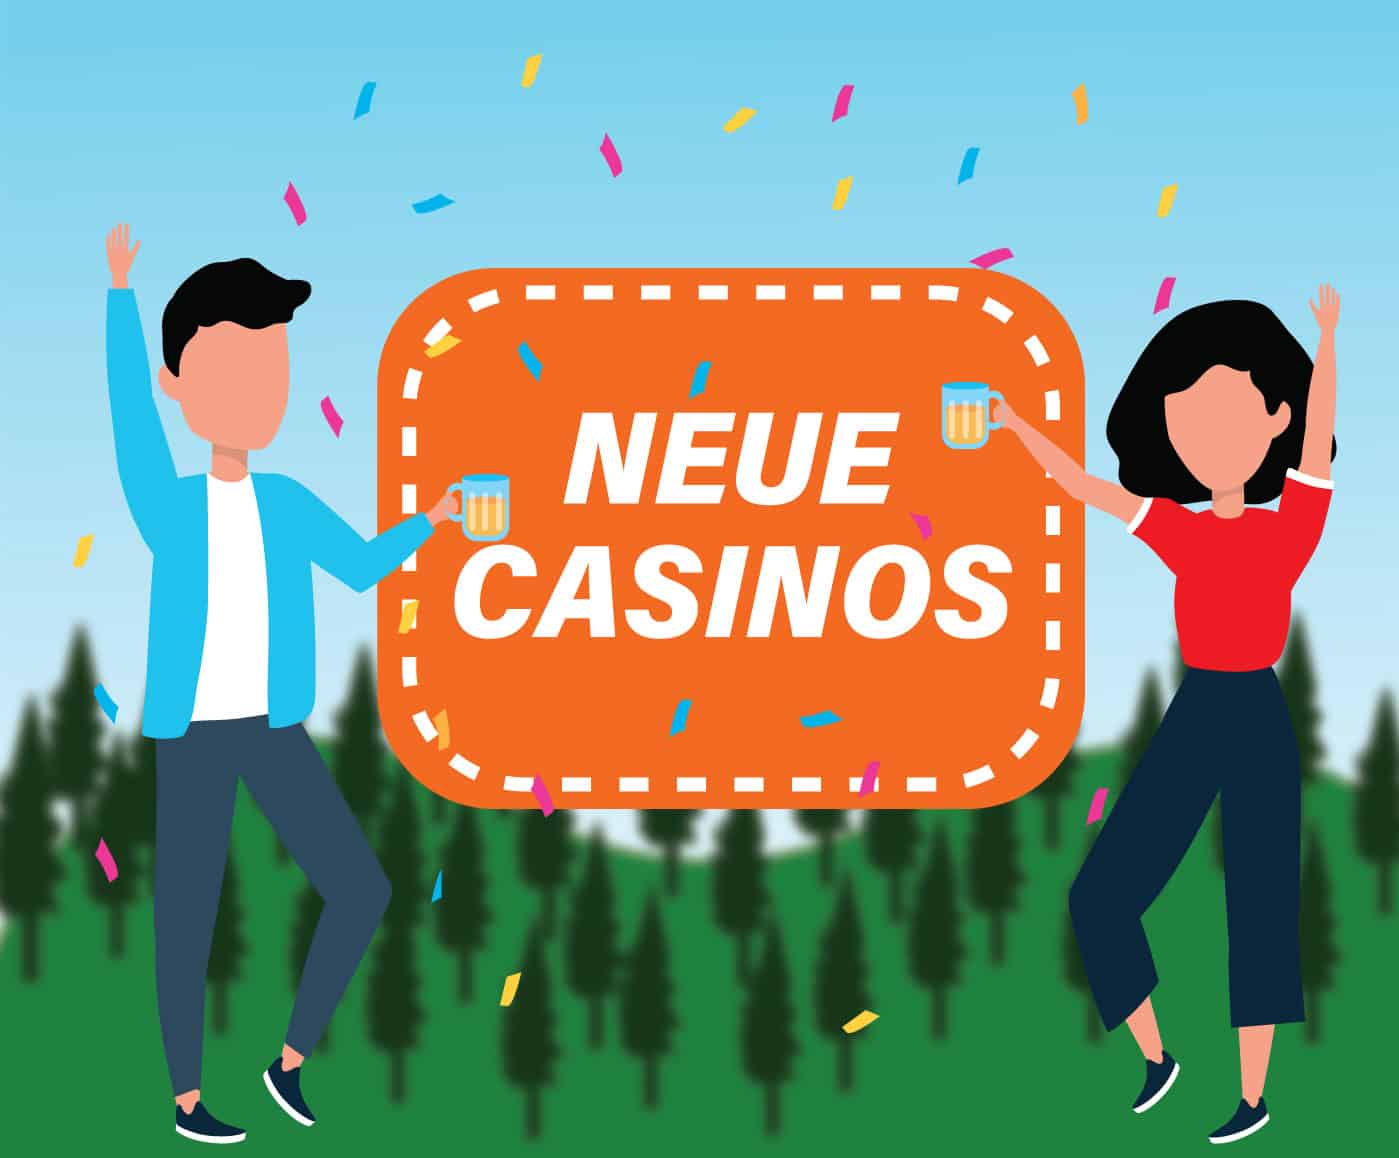 Neue online casinos